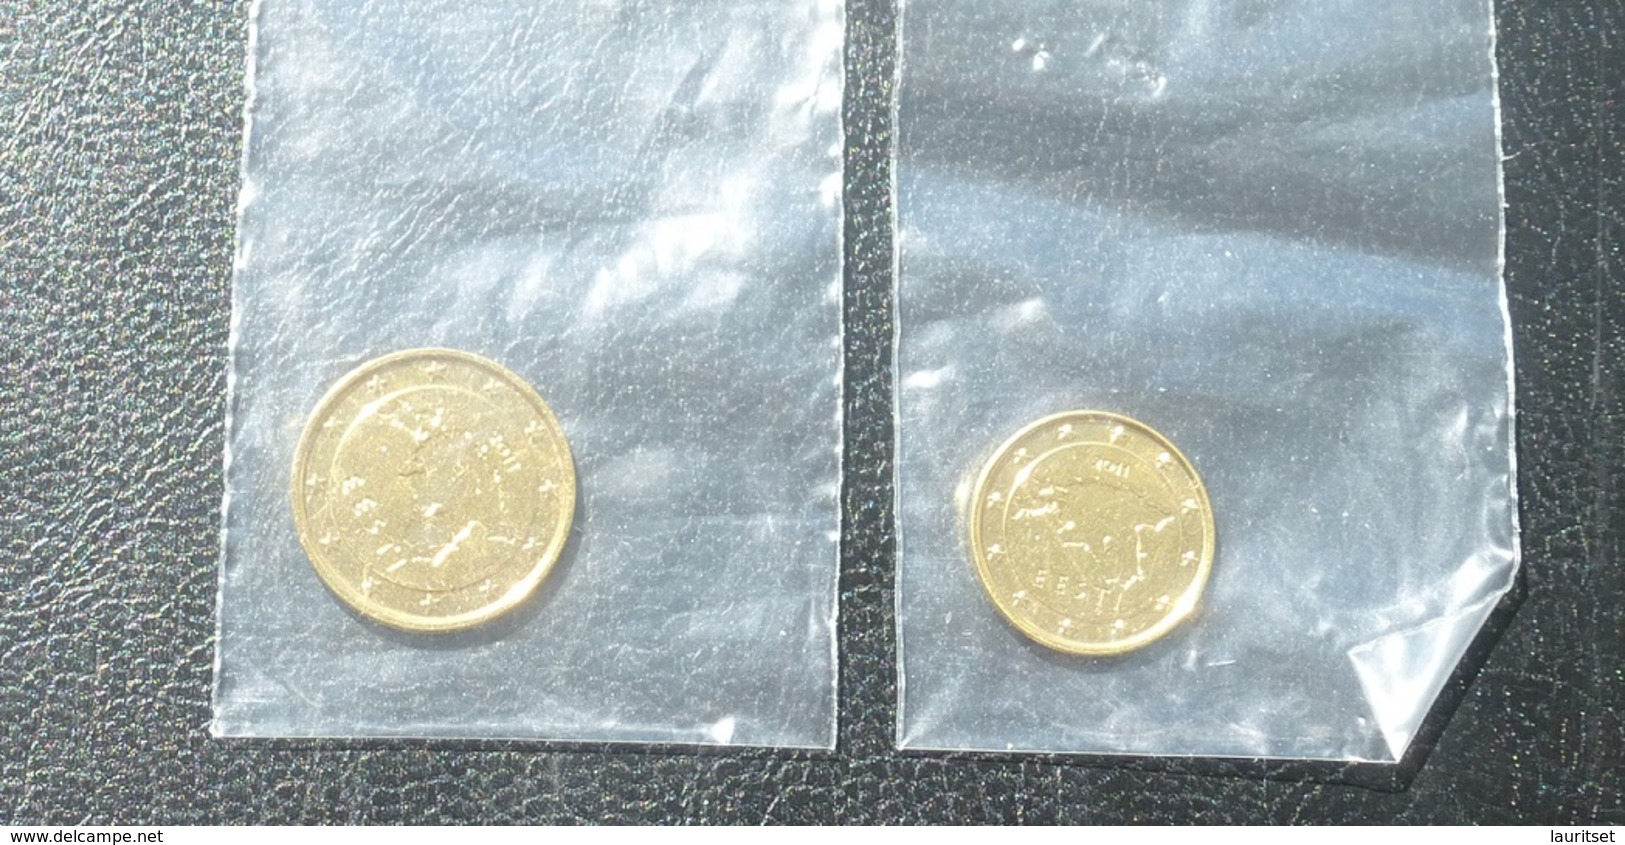 ESTLAND ESTONIA 1 & 2 Cent Coin Gold Plated Vergoldet 999/1000 (24 Karat) - Estonia